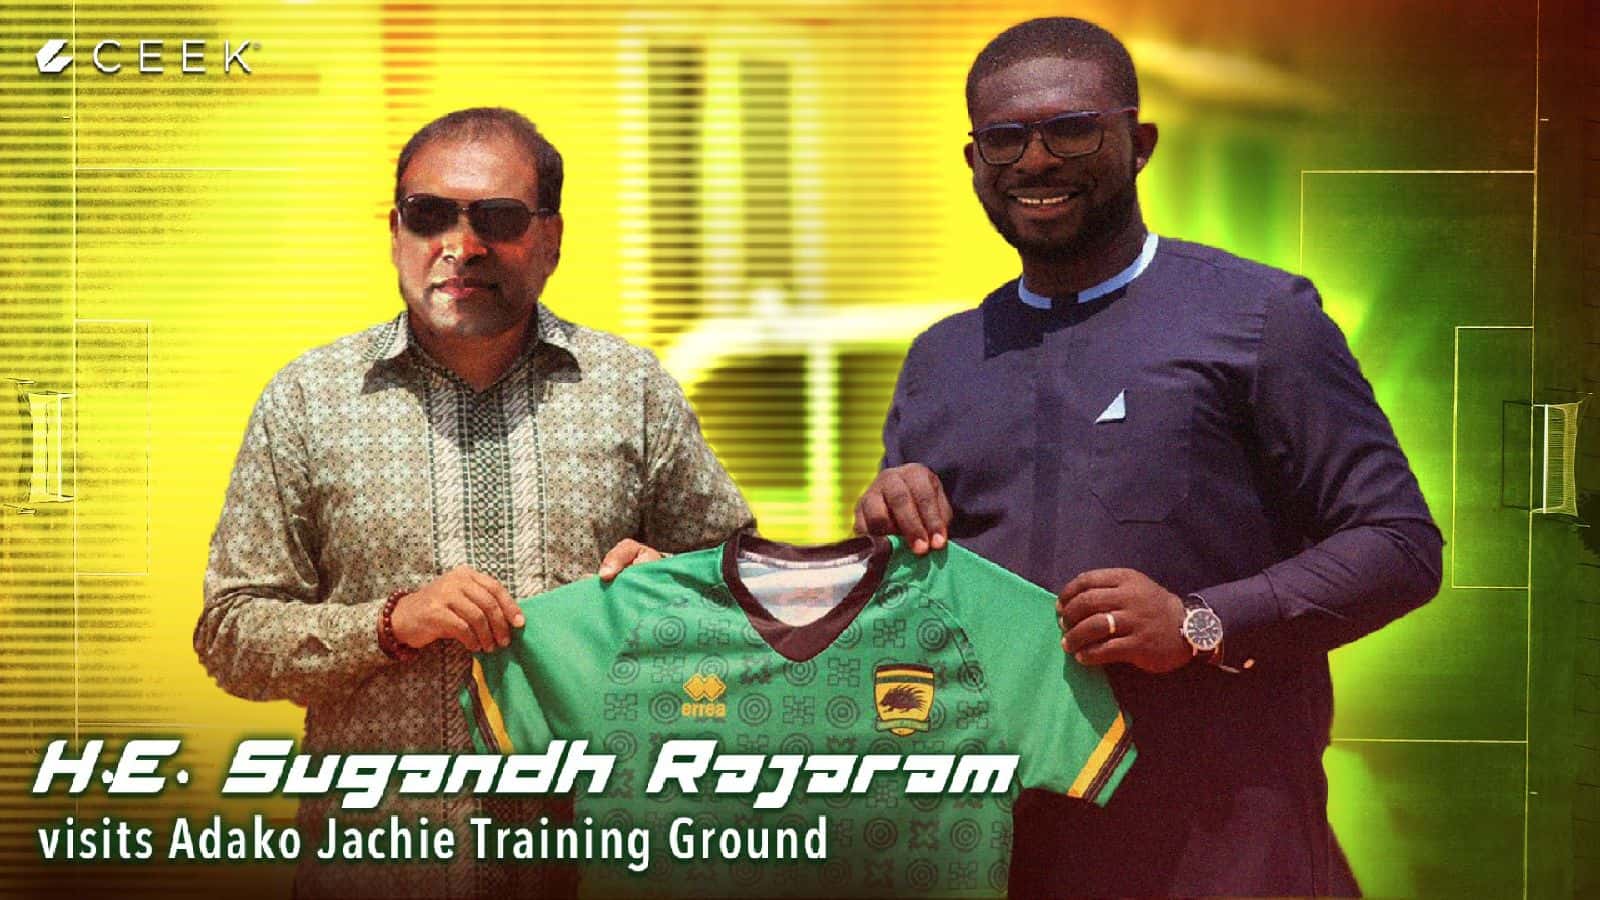 Asante Kotoko Indian High Commissioner to Ghana, H.E. Sugandh Rajaram visits Adako Jachie Training Ground